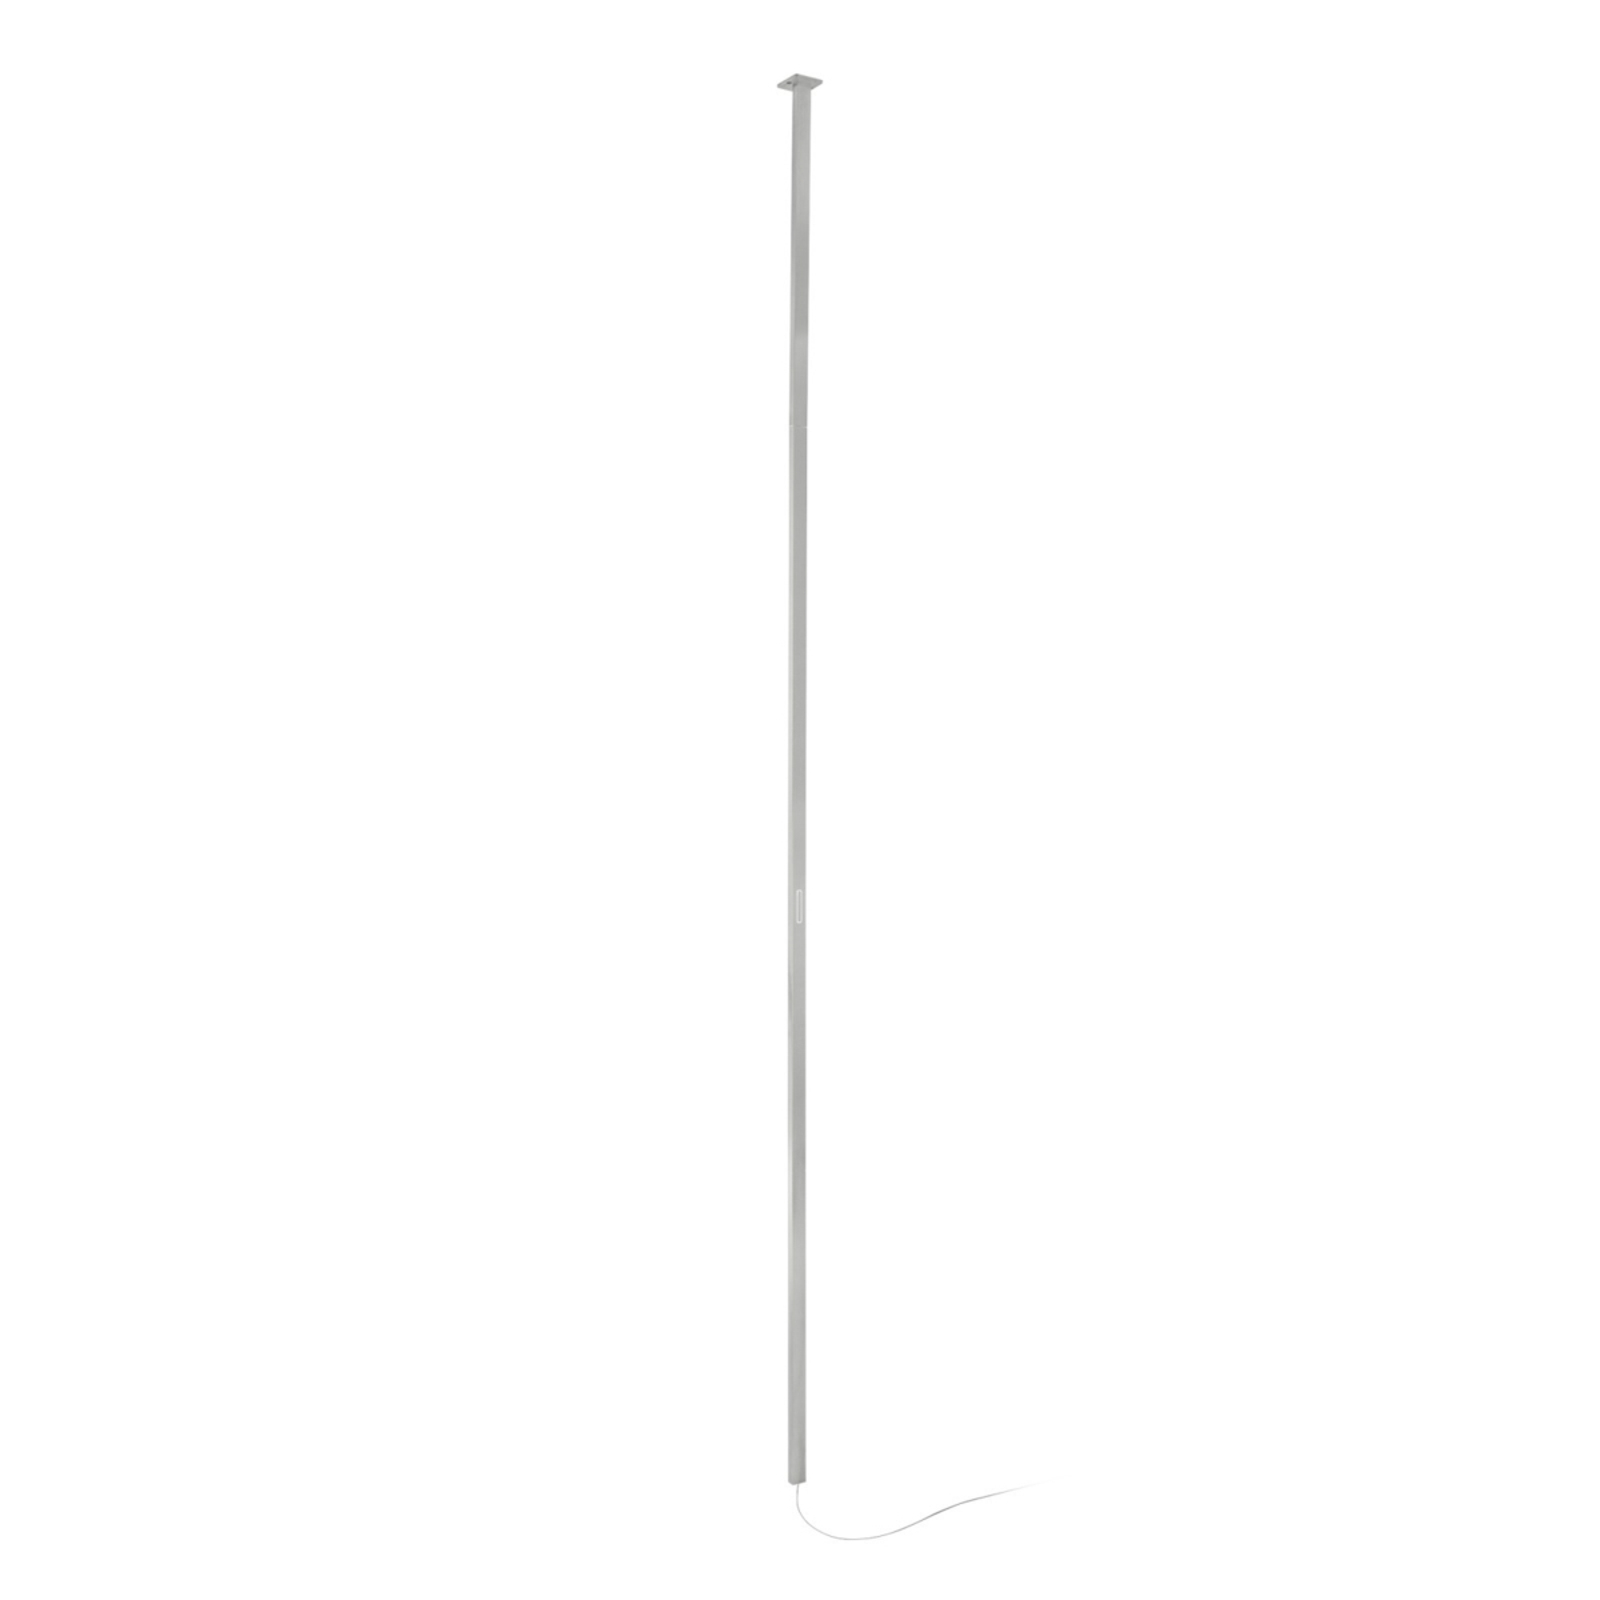 Stilnovo Xilema LED a sospensione, dimming, bianco